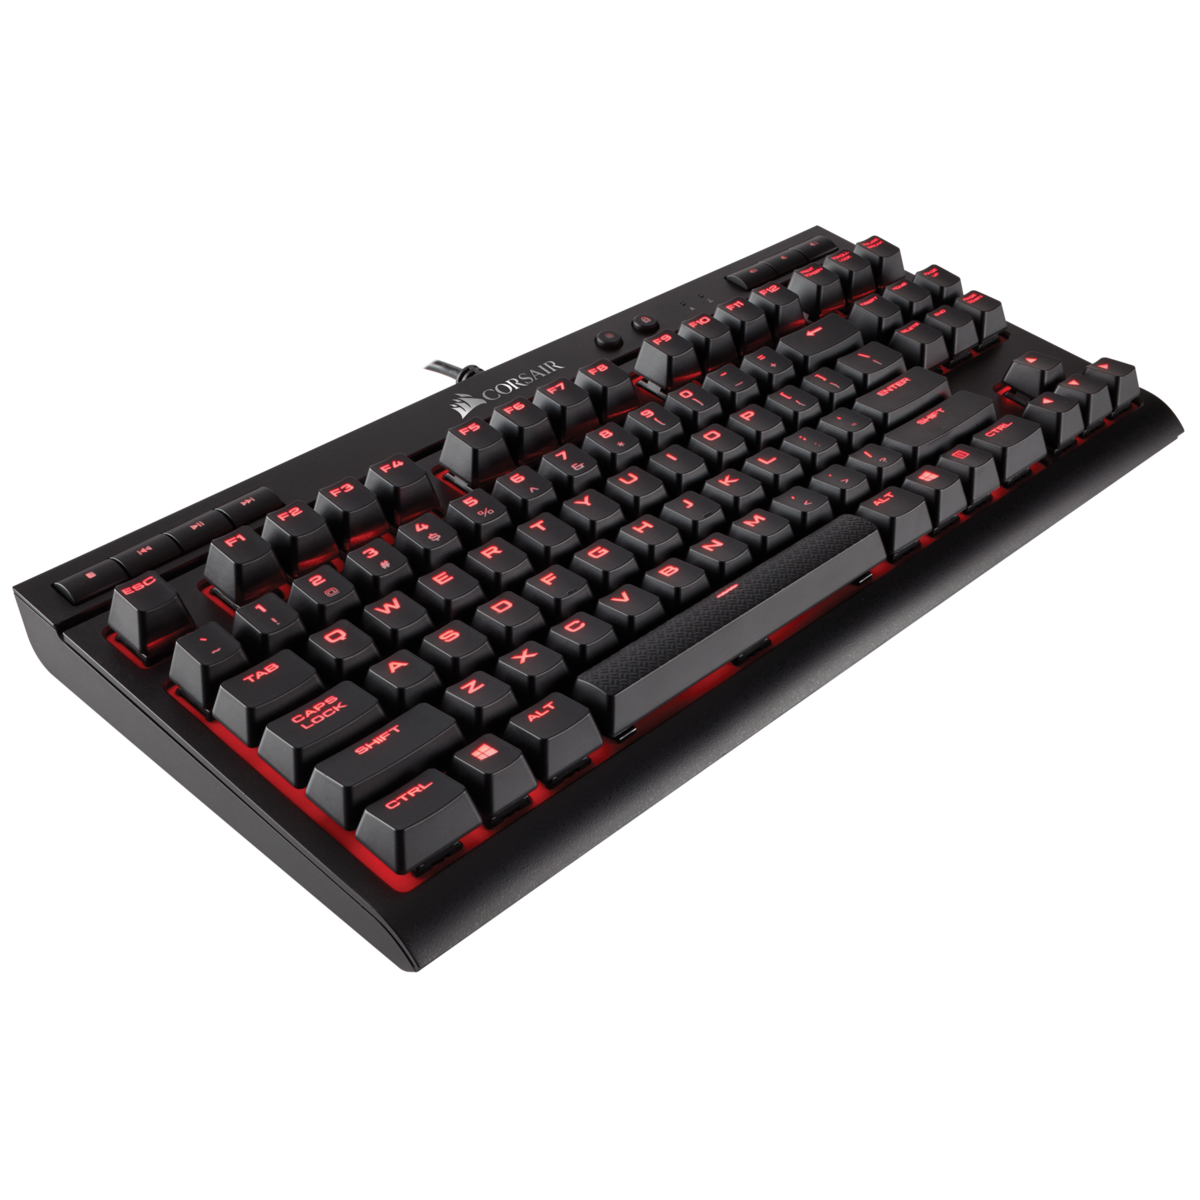 Corsair K63 Compact Mechanical Gaming Keyboard — CHERRY MX Red CH-9115020-NA